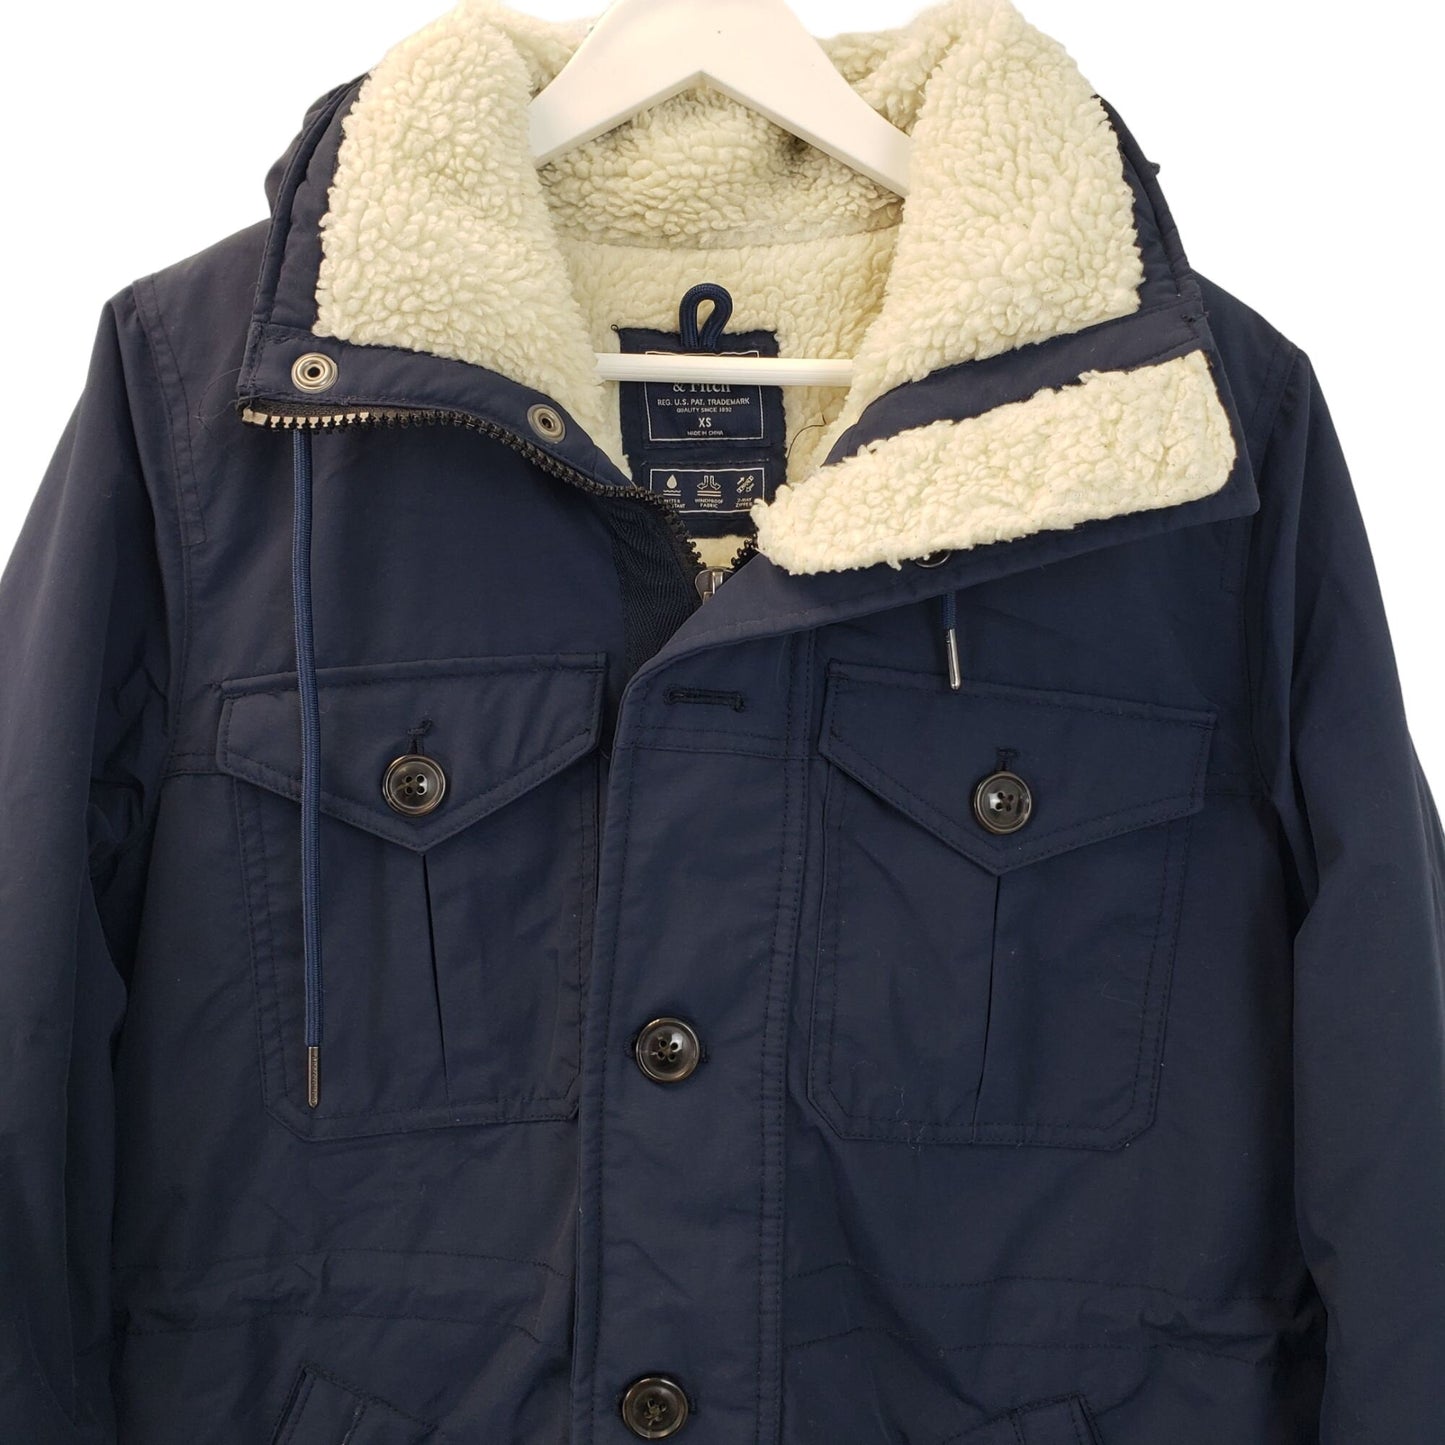 Abercrombie & Fitch Trekking Hooded Parka Jacket Coat Size XS